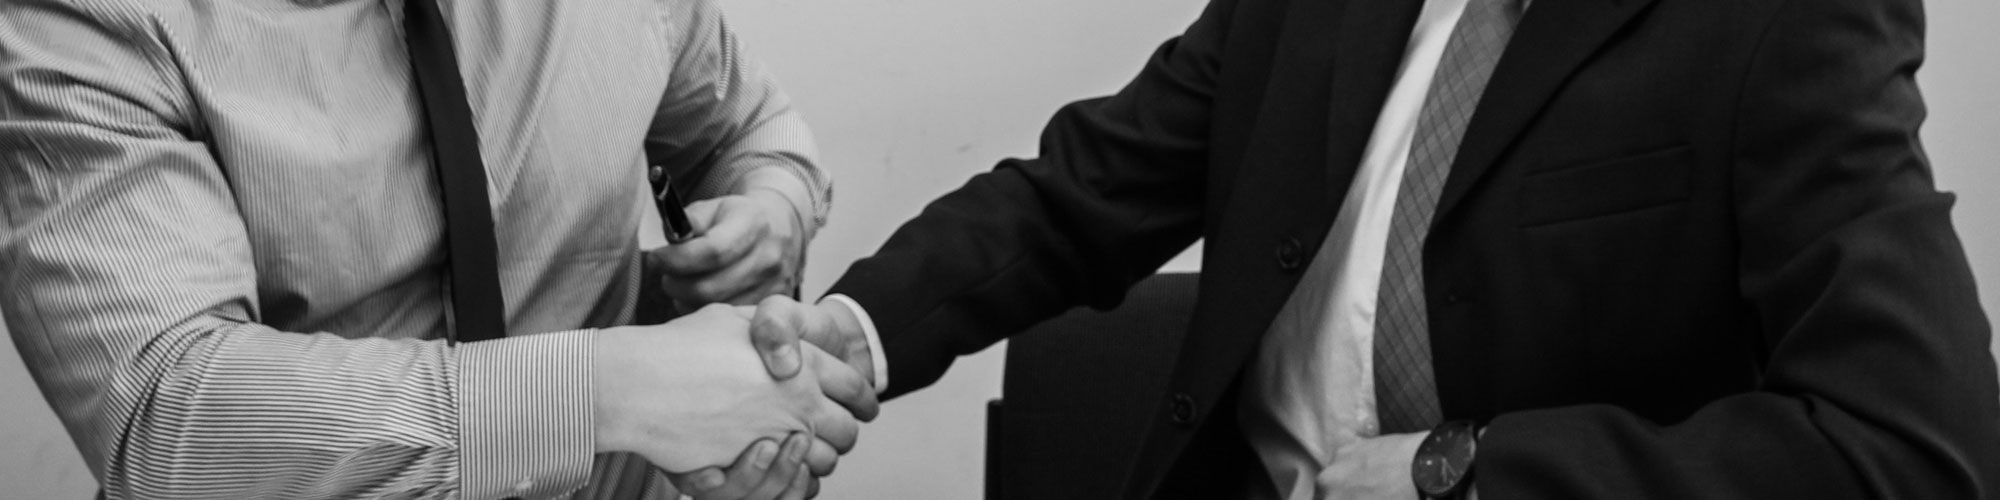 Men Shaking Hands At Job Interview